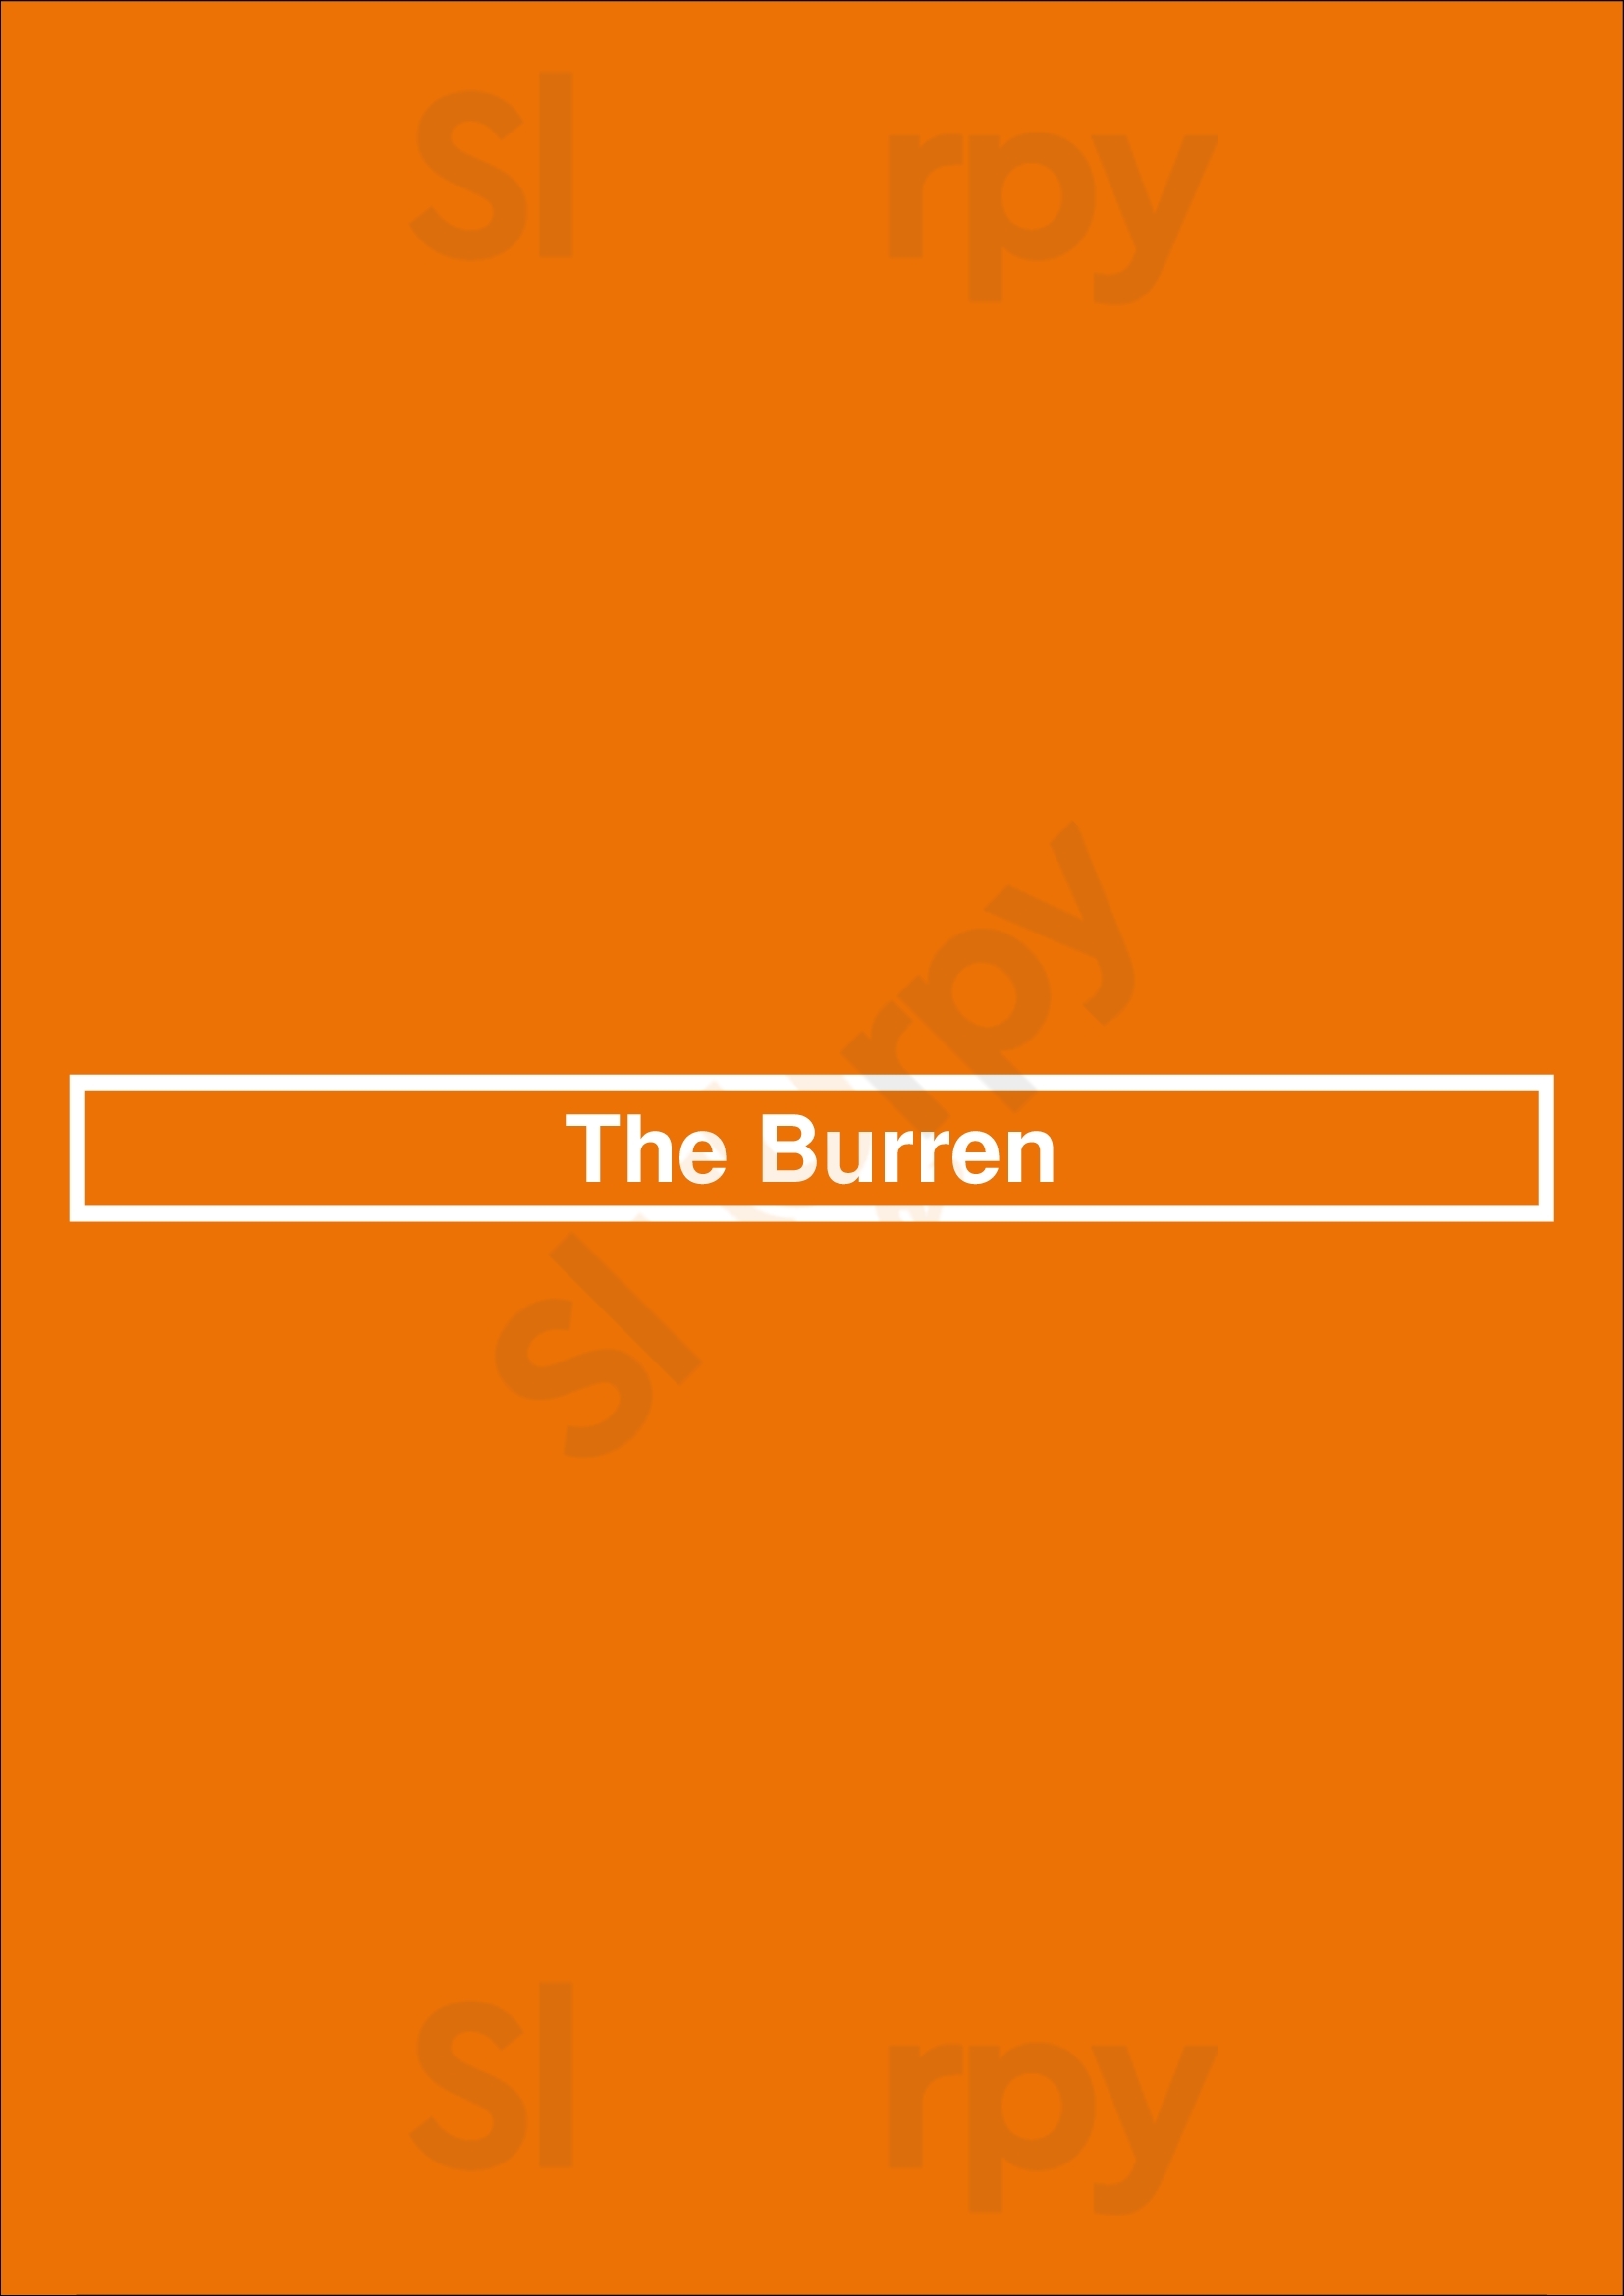 The Burren Somerville Menu - 1